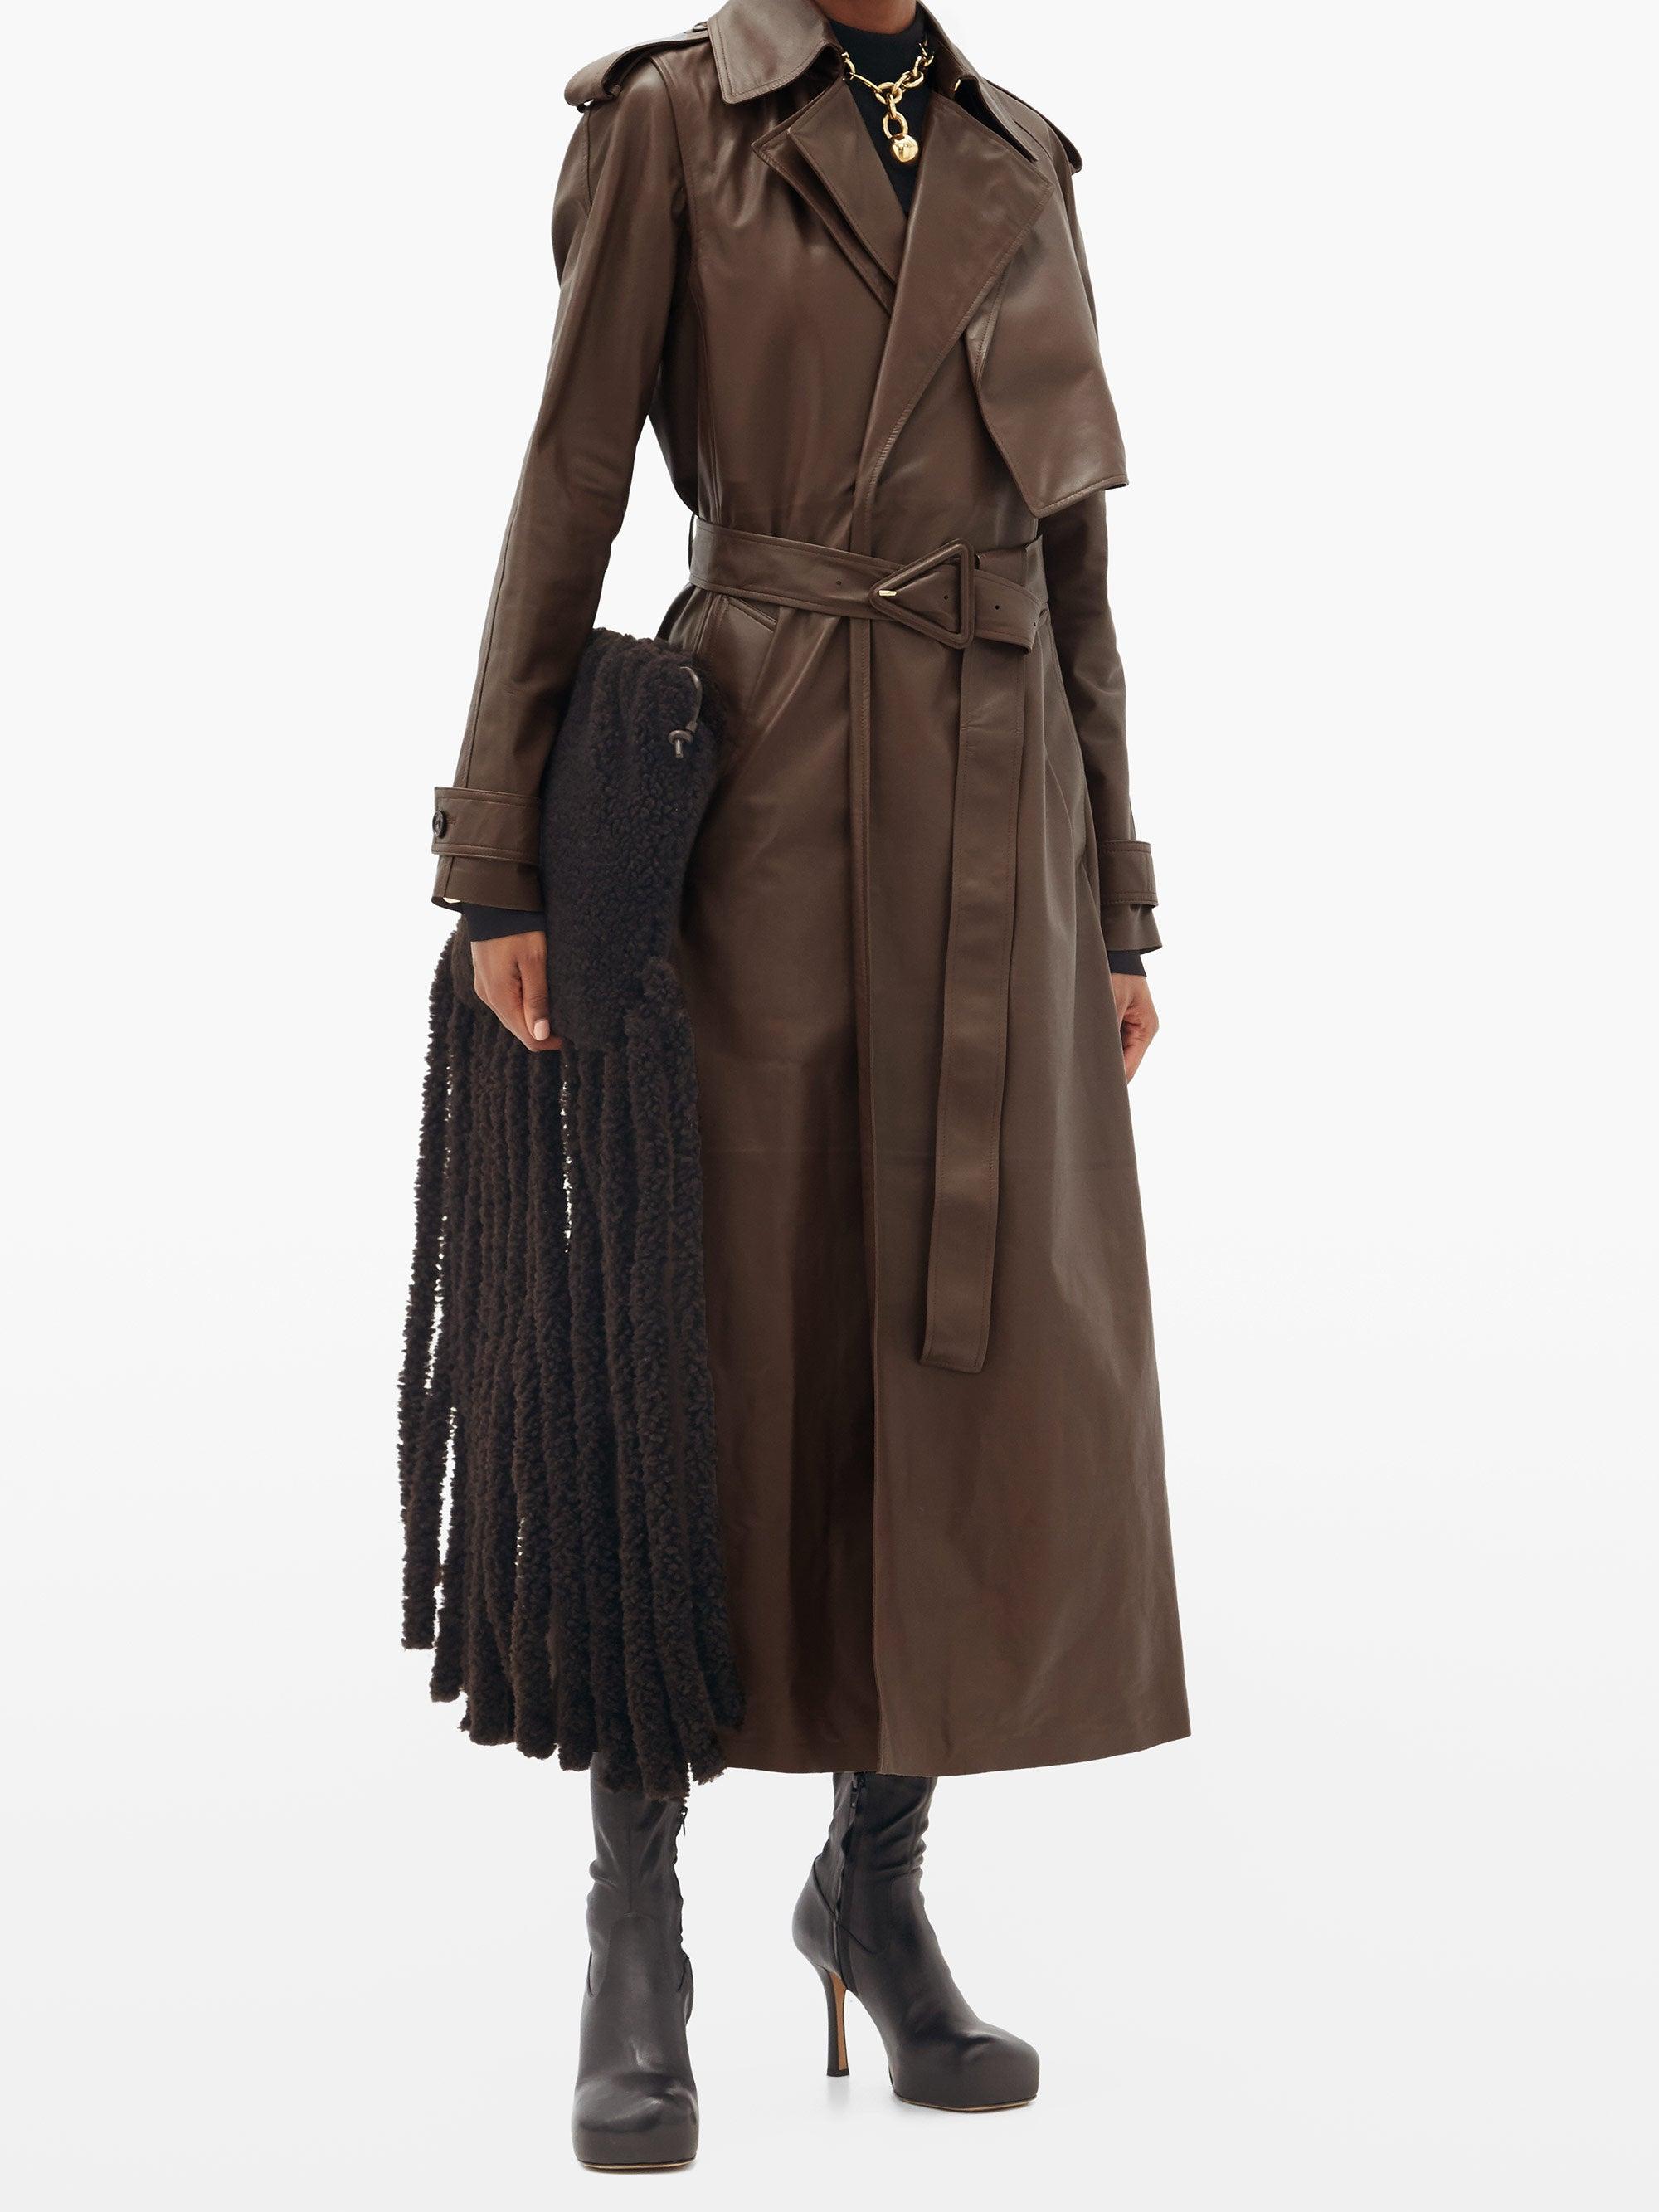 Bottega Veneta Belted Leather Trench Coat in Dark Brown (Brown) - Lyst